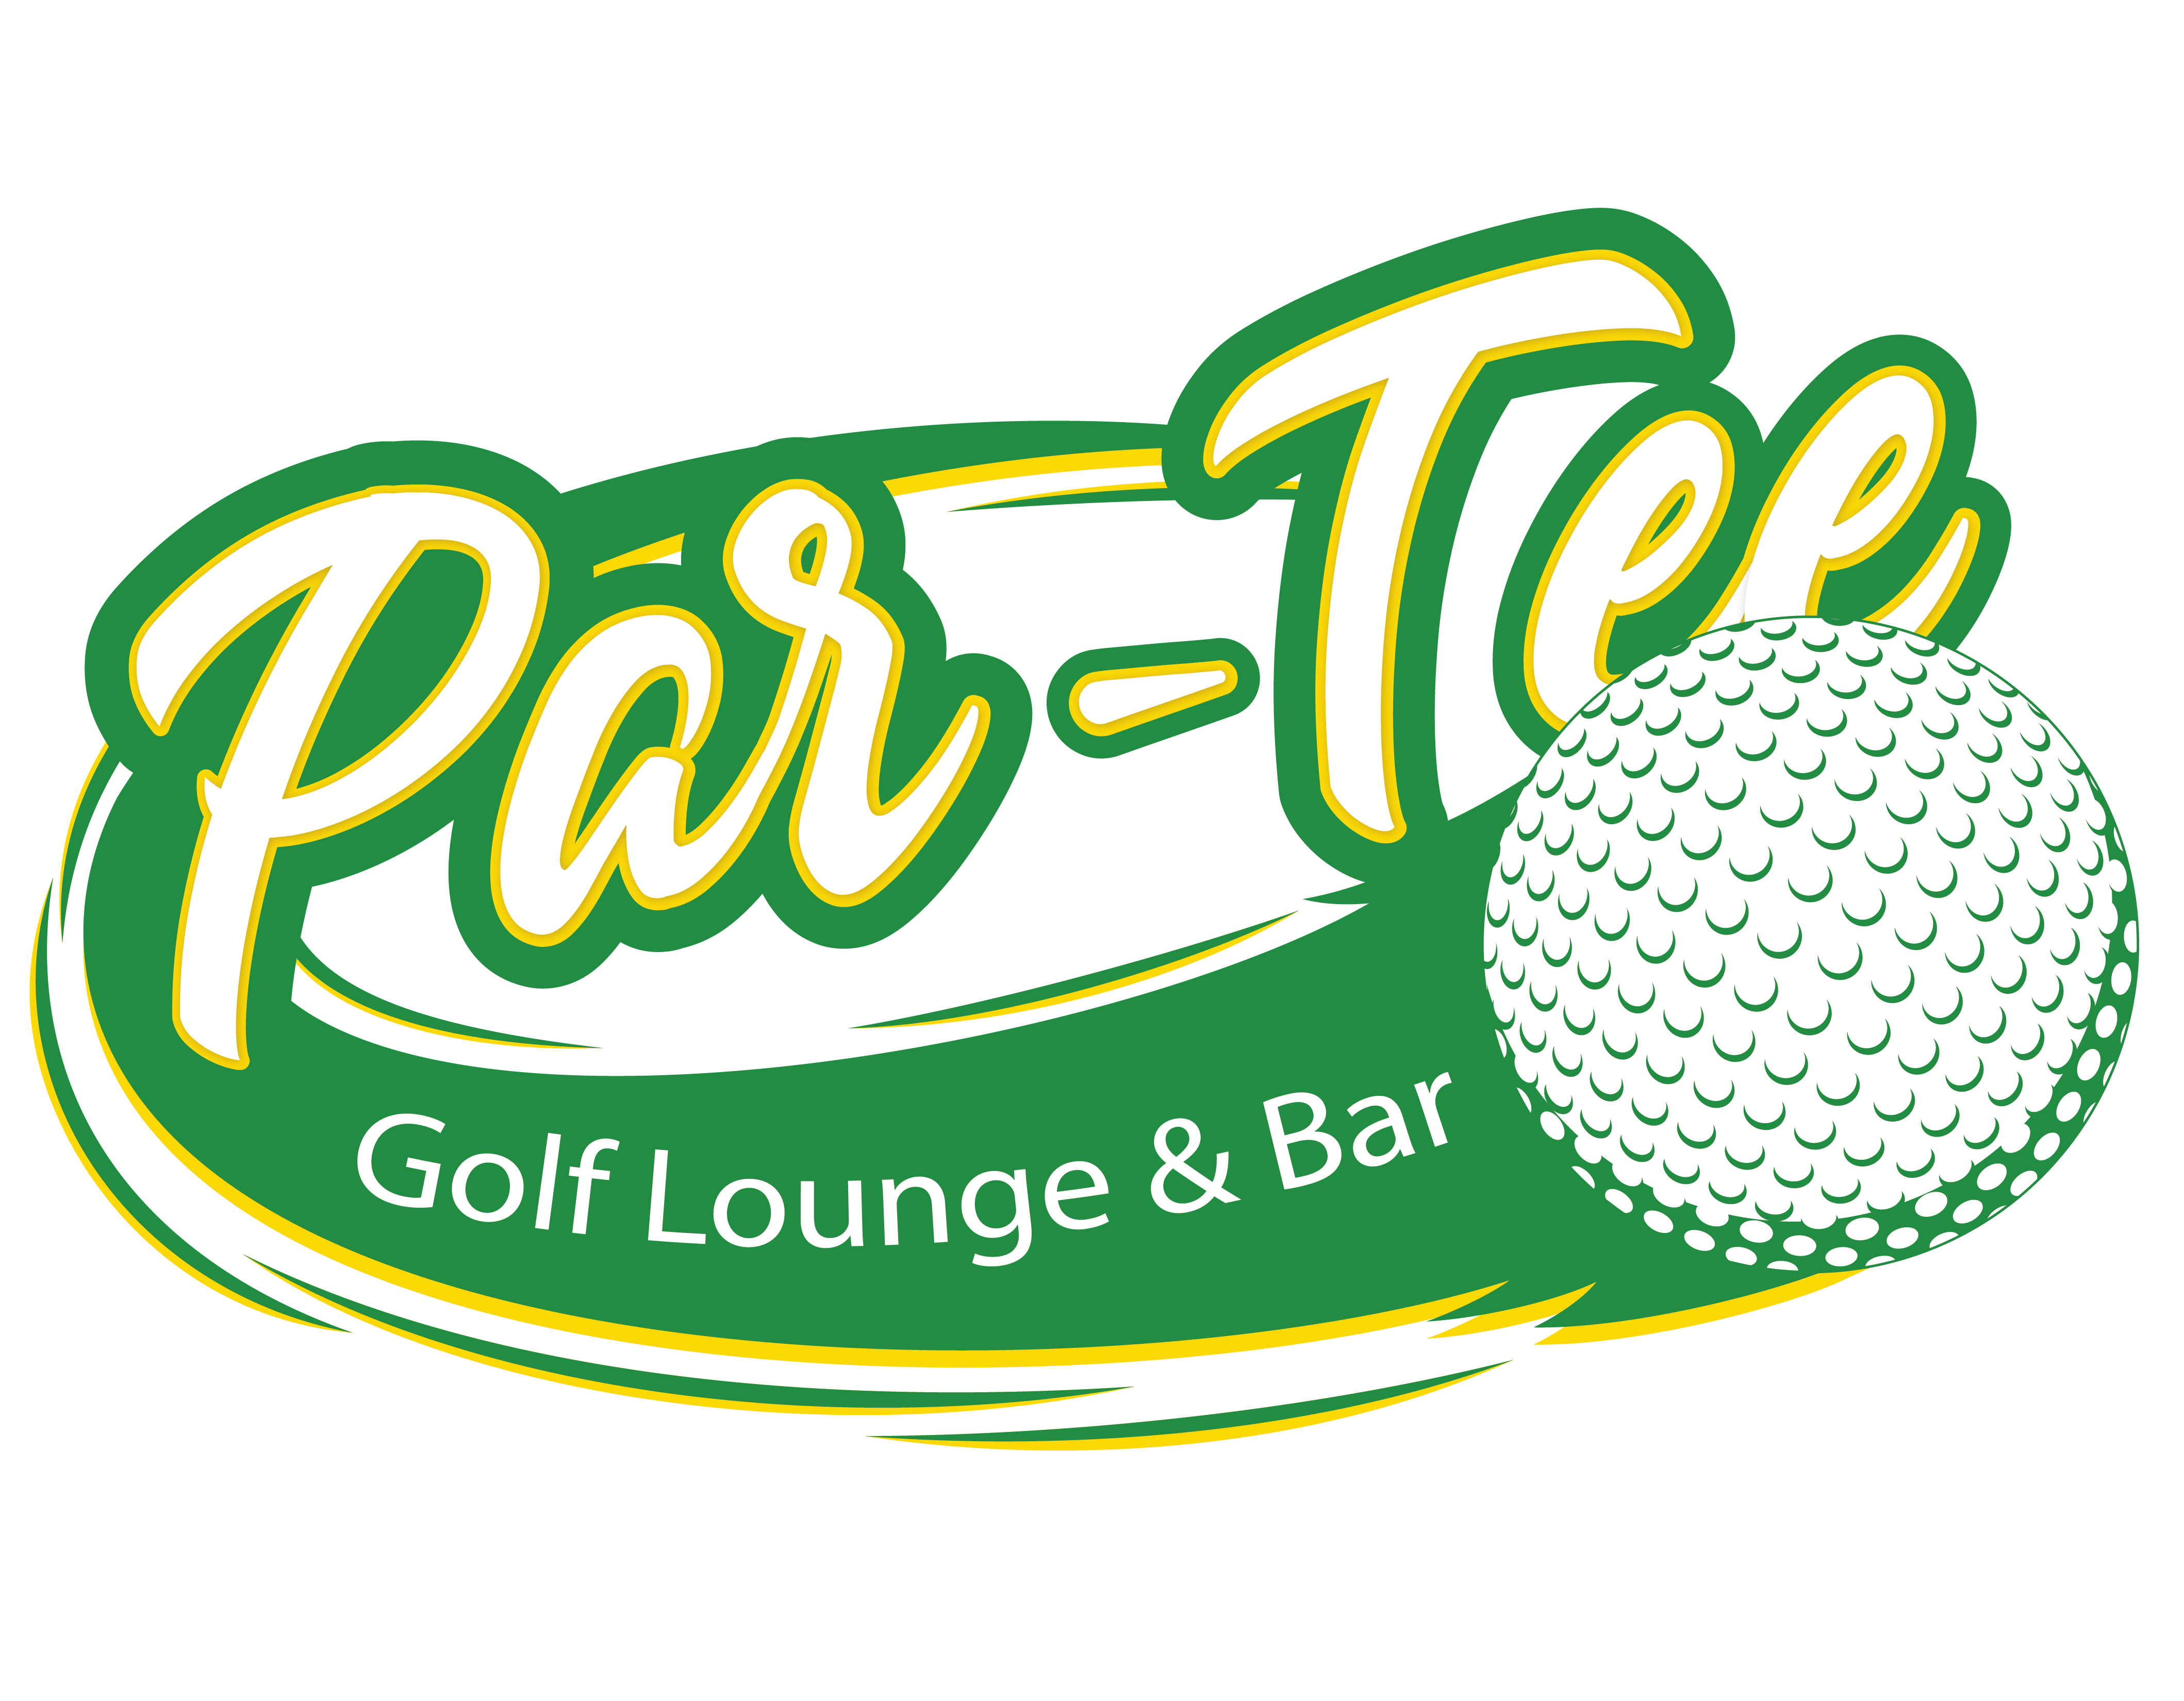 Par-Tee Golf Lounge